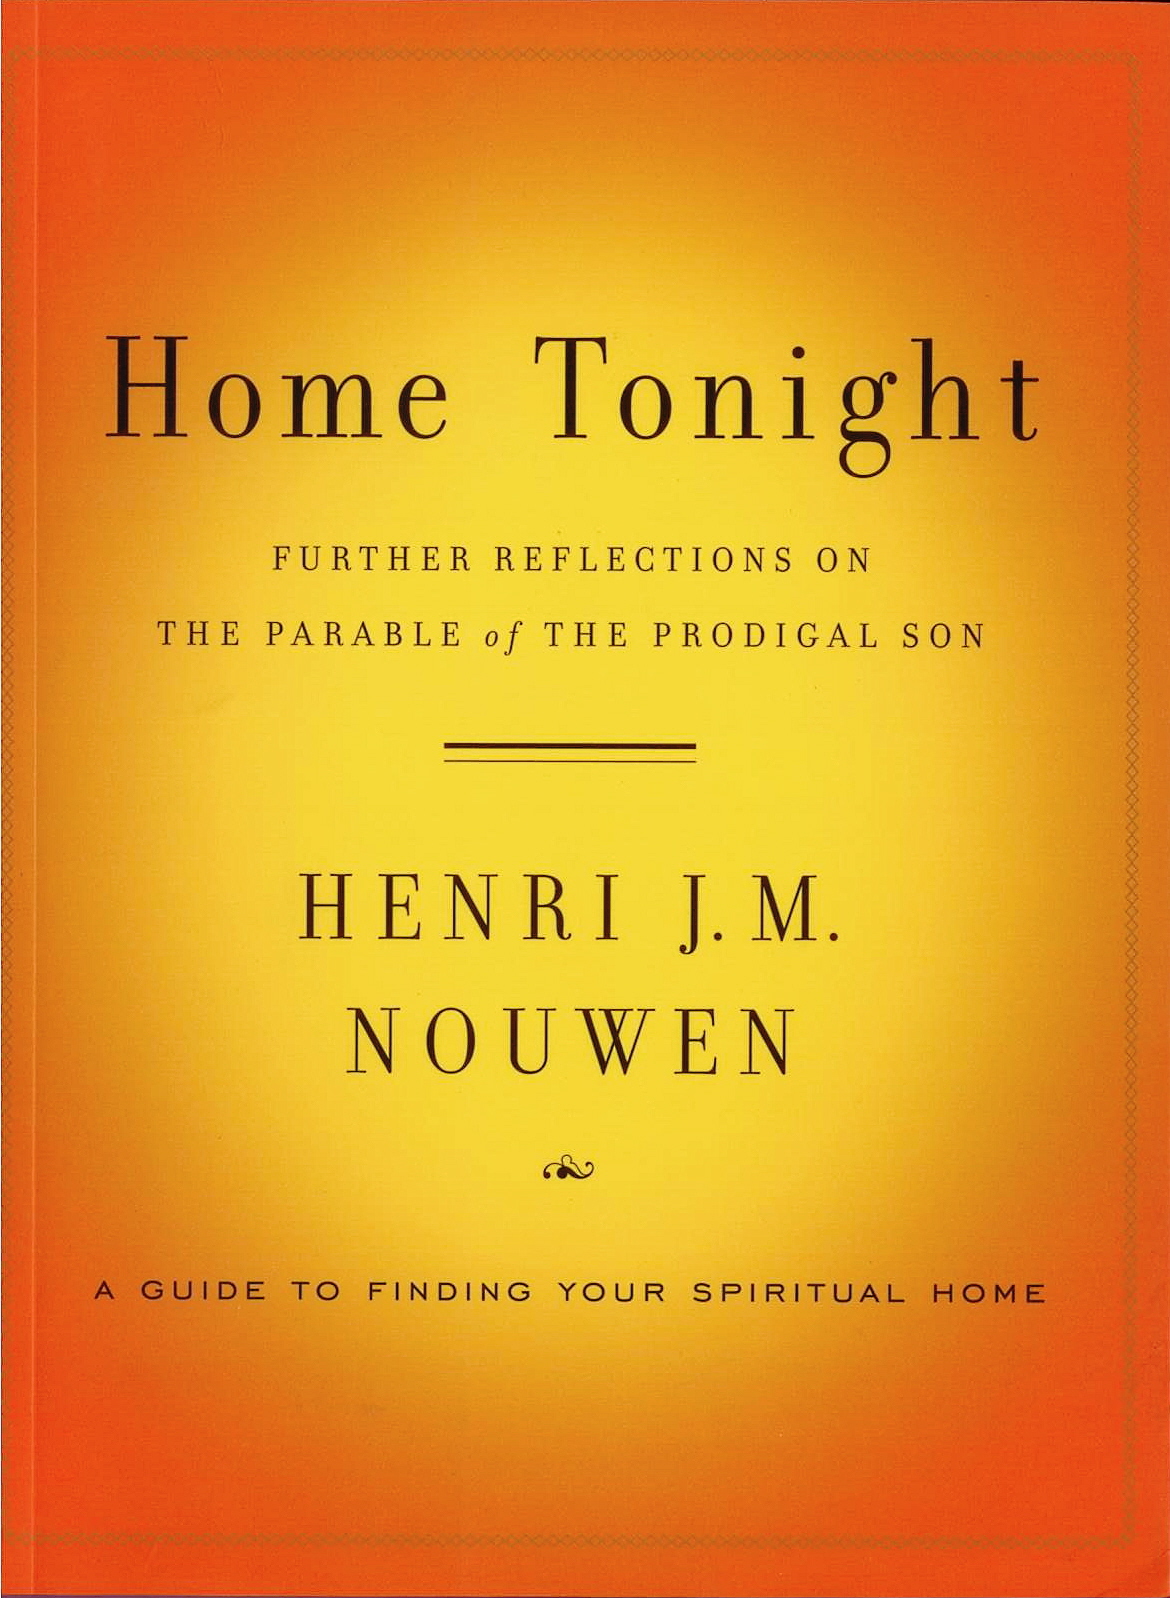 Home Tonight by Henri J.M. Nouwen